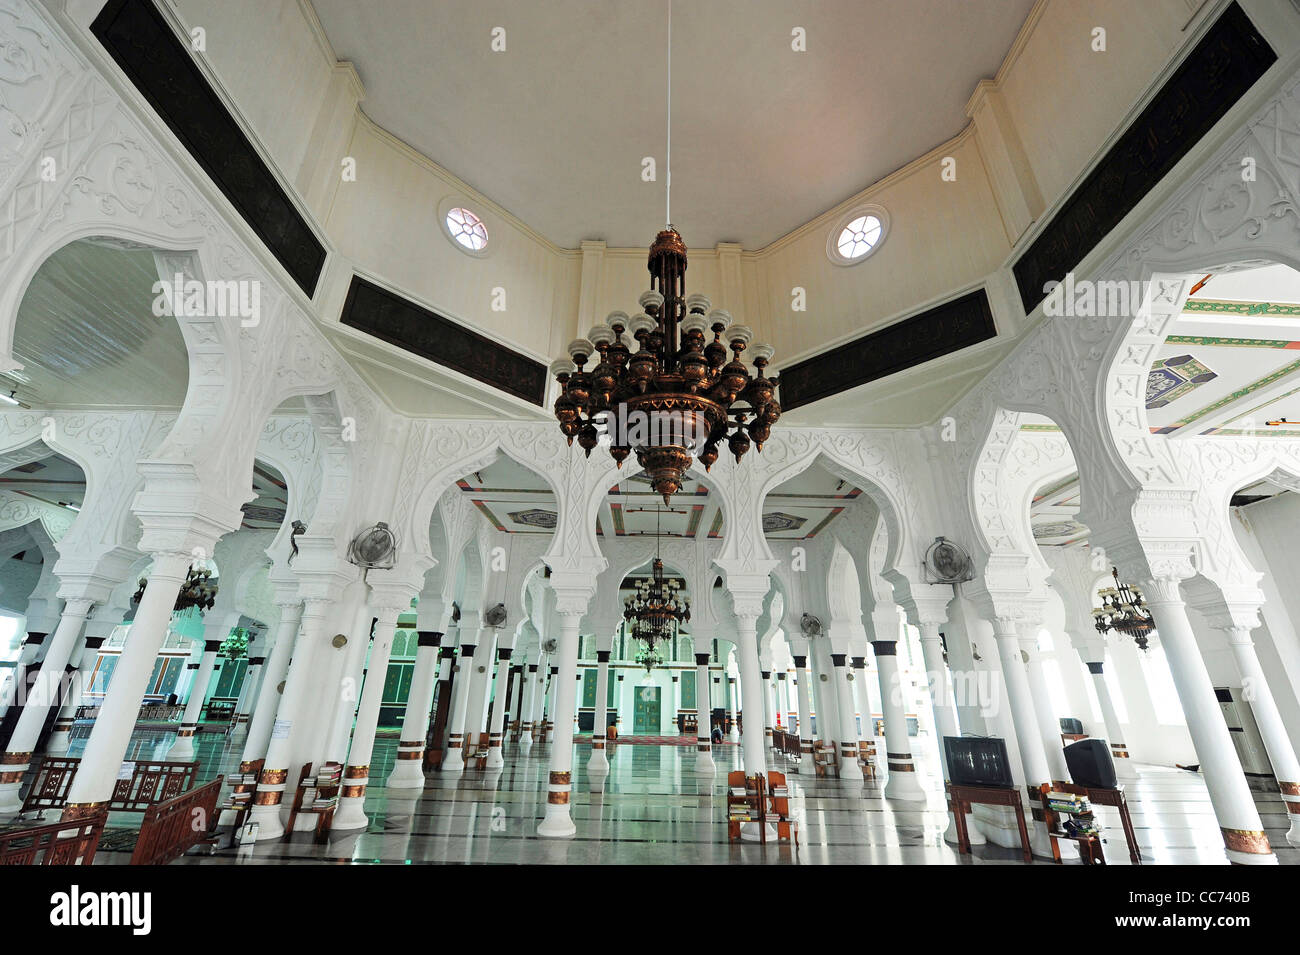 Indonesia, Sumatra, Banda Aceh, inside the Baiturrahman Grand Mosque (Mesjid Raya Baiturrahman) Stock Photo